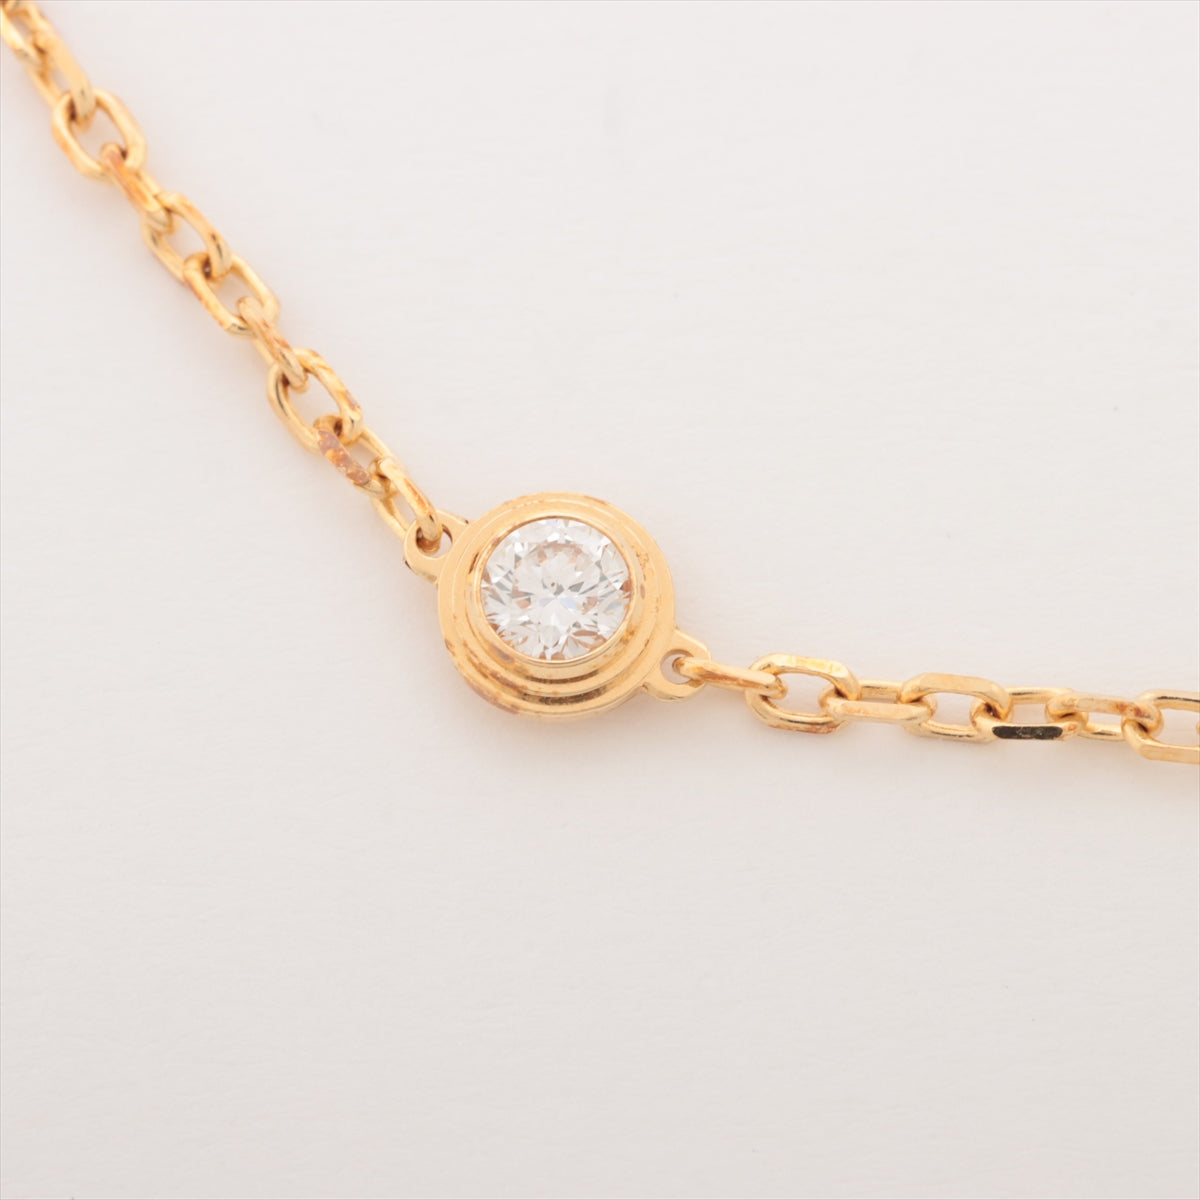 Cartier Damour SM Diamond Bracelet 750 (YG) 2.1g